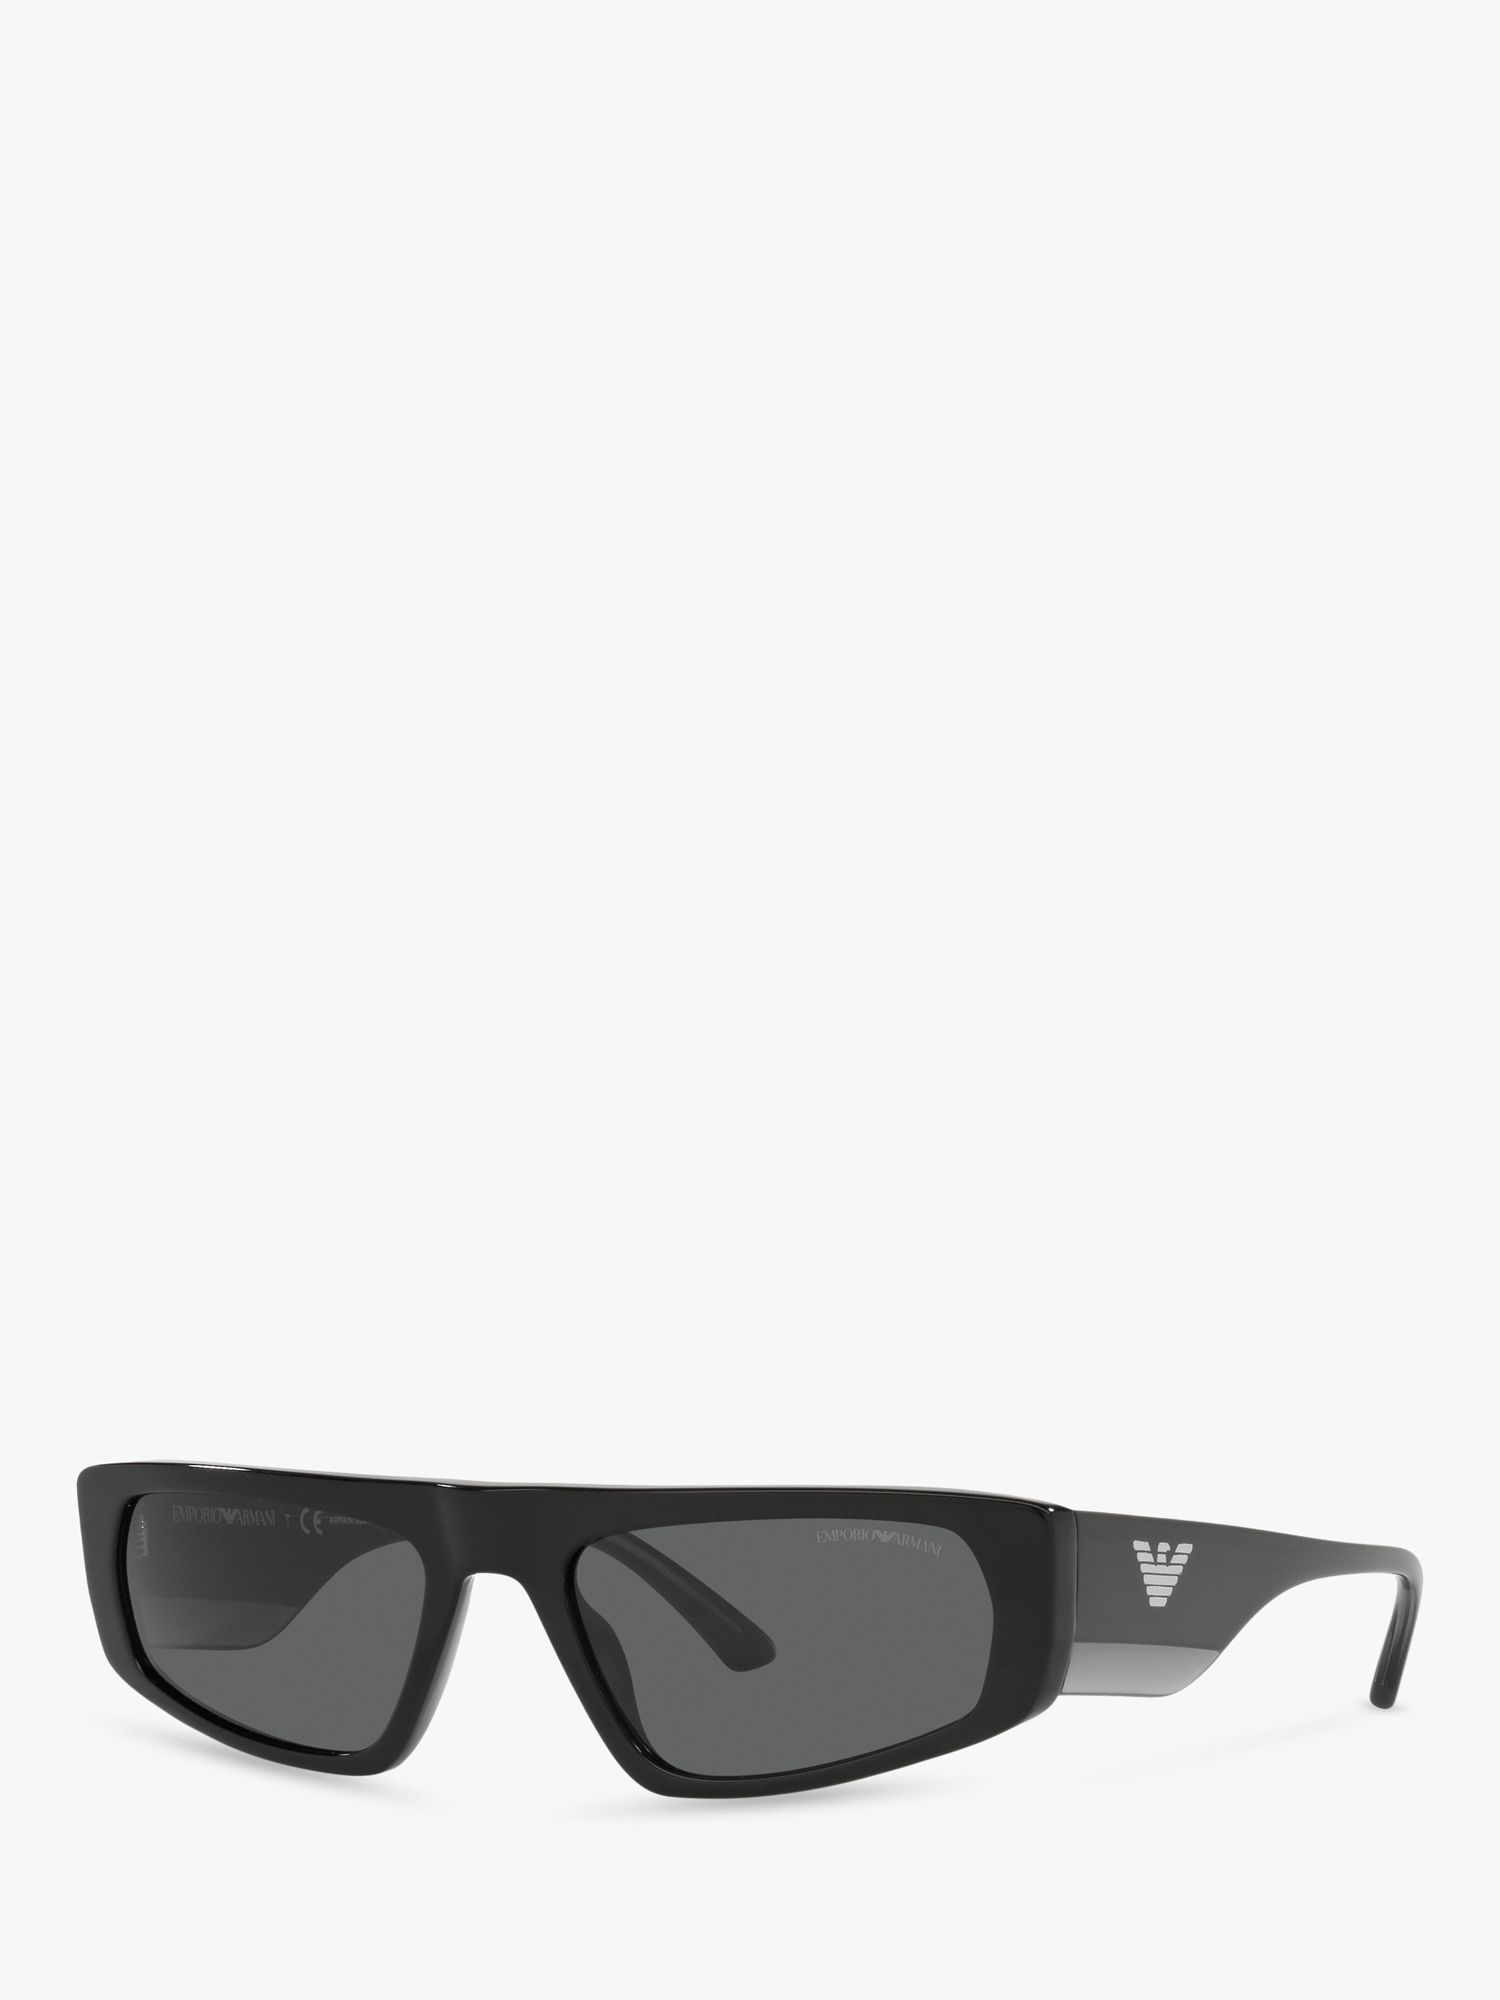 Emporio Armani EA4168 Men's Pillow Sunglasses, Black/Grey at John Lewis &  Partners